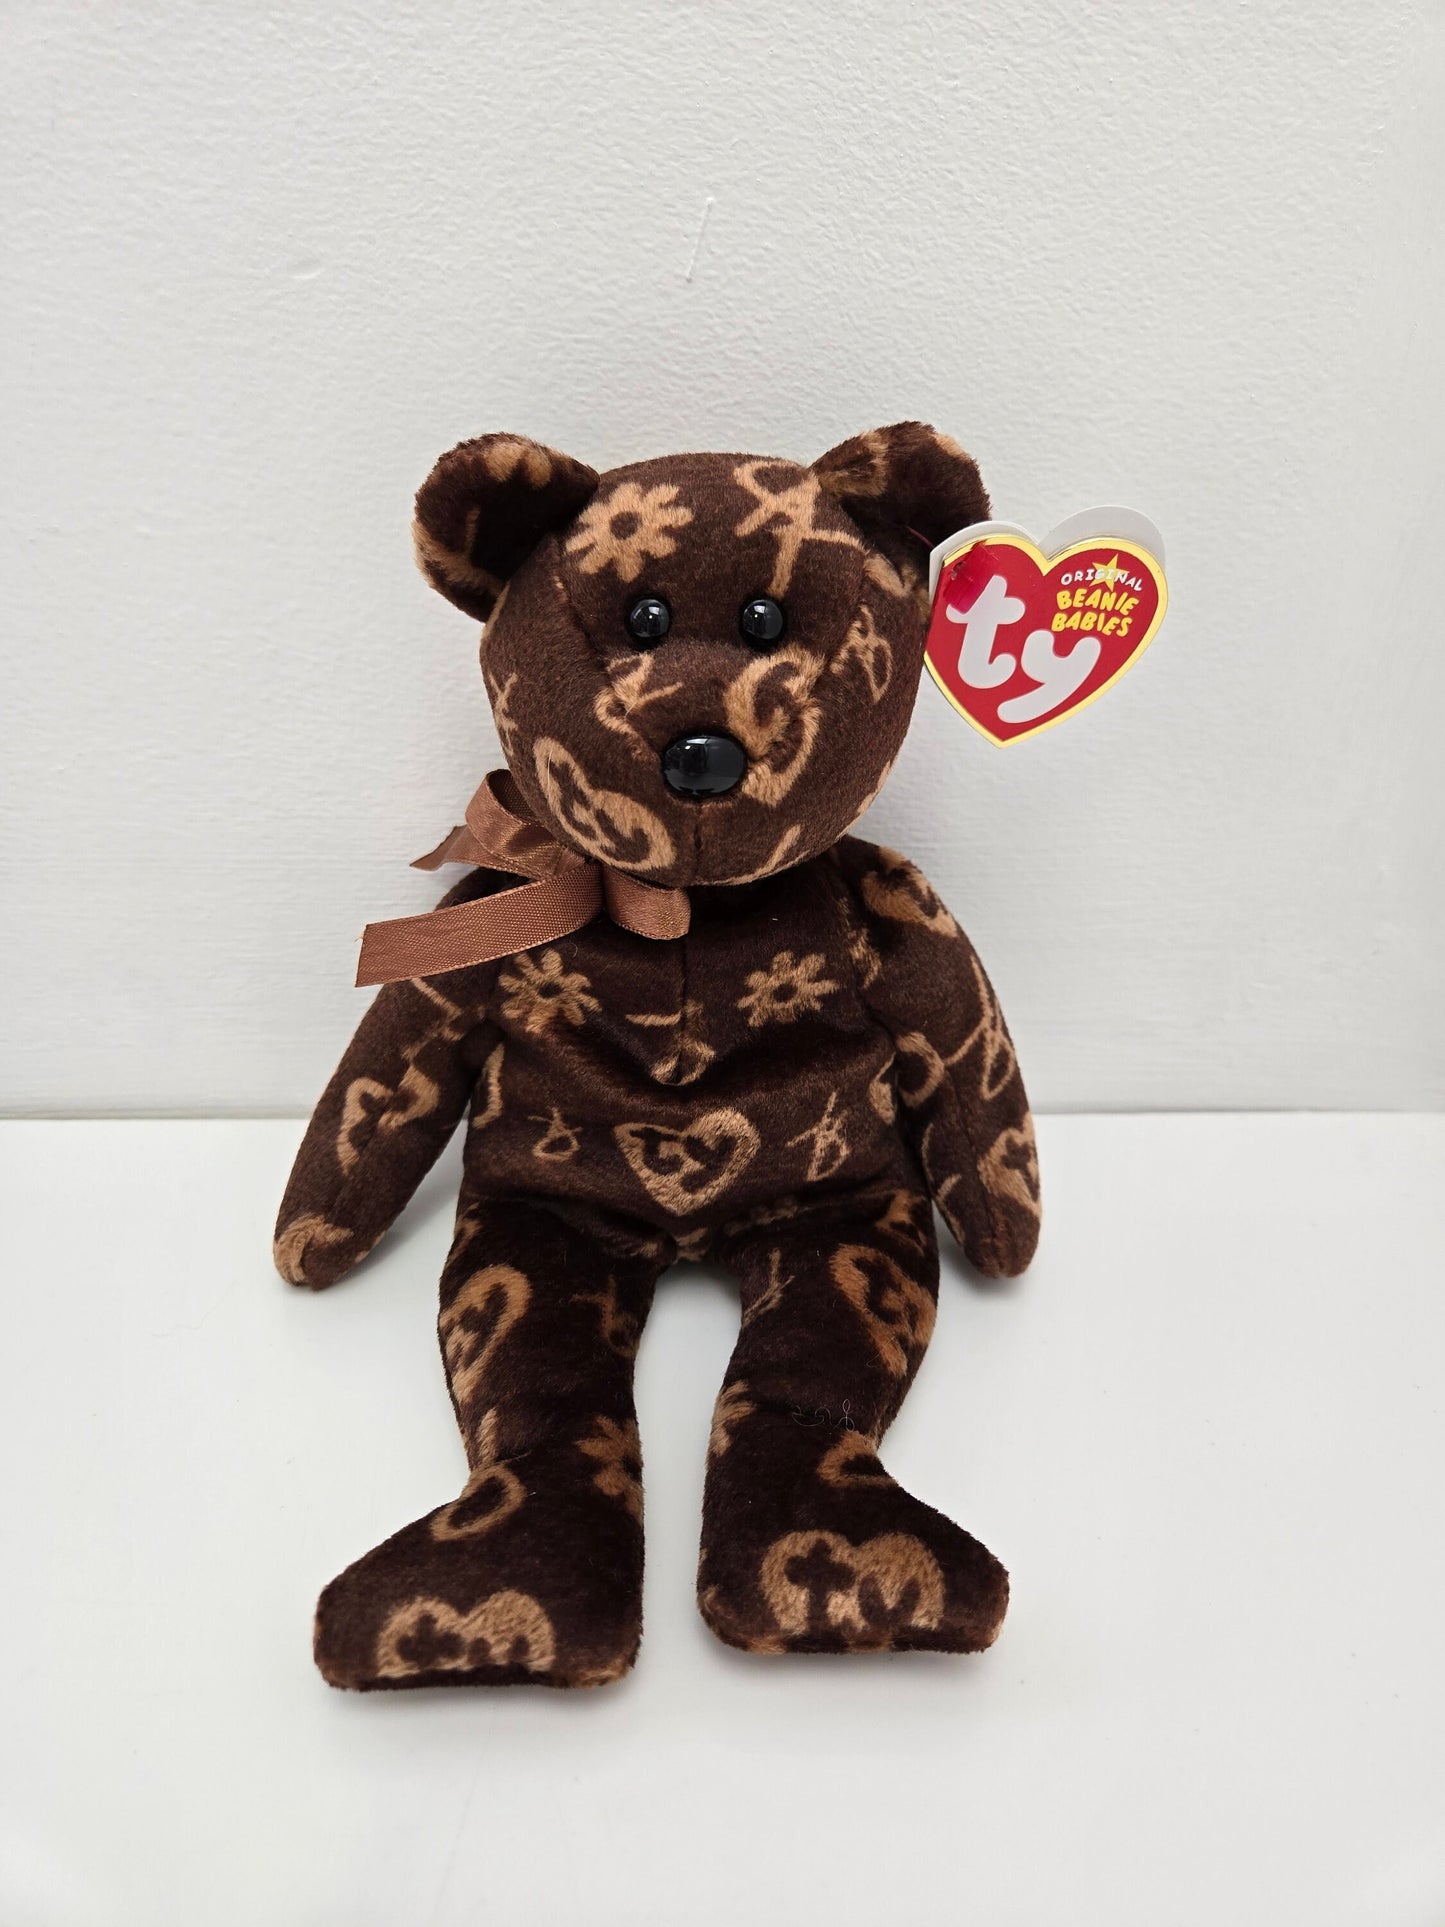 TY Beanie Baby “Signature Bear” the Bear (8.5 inch)